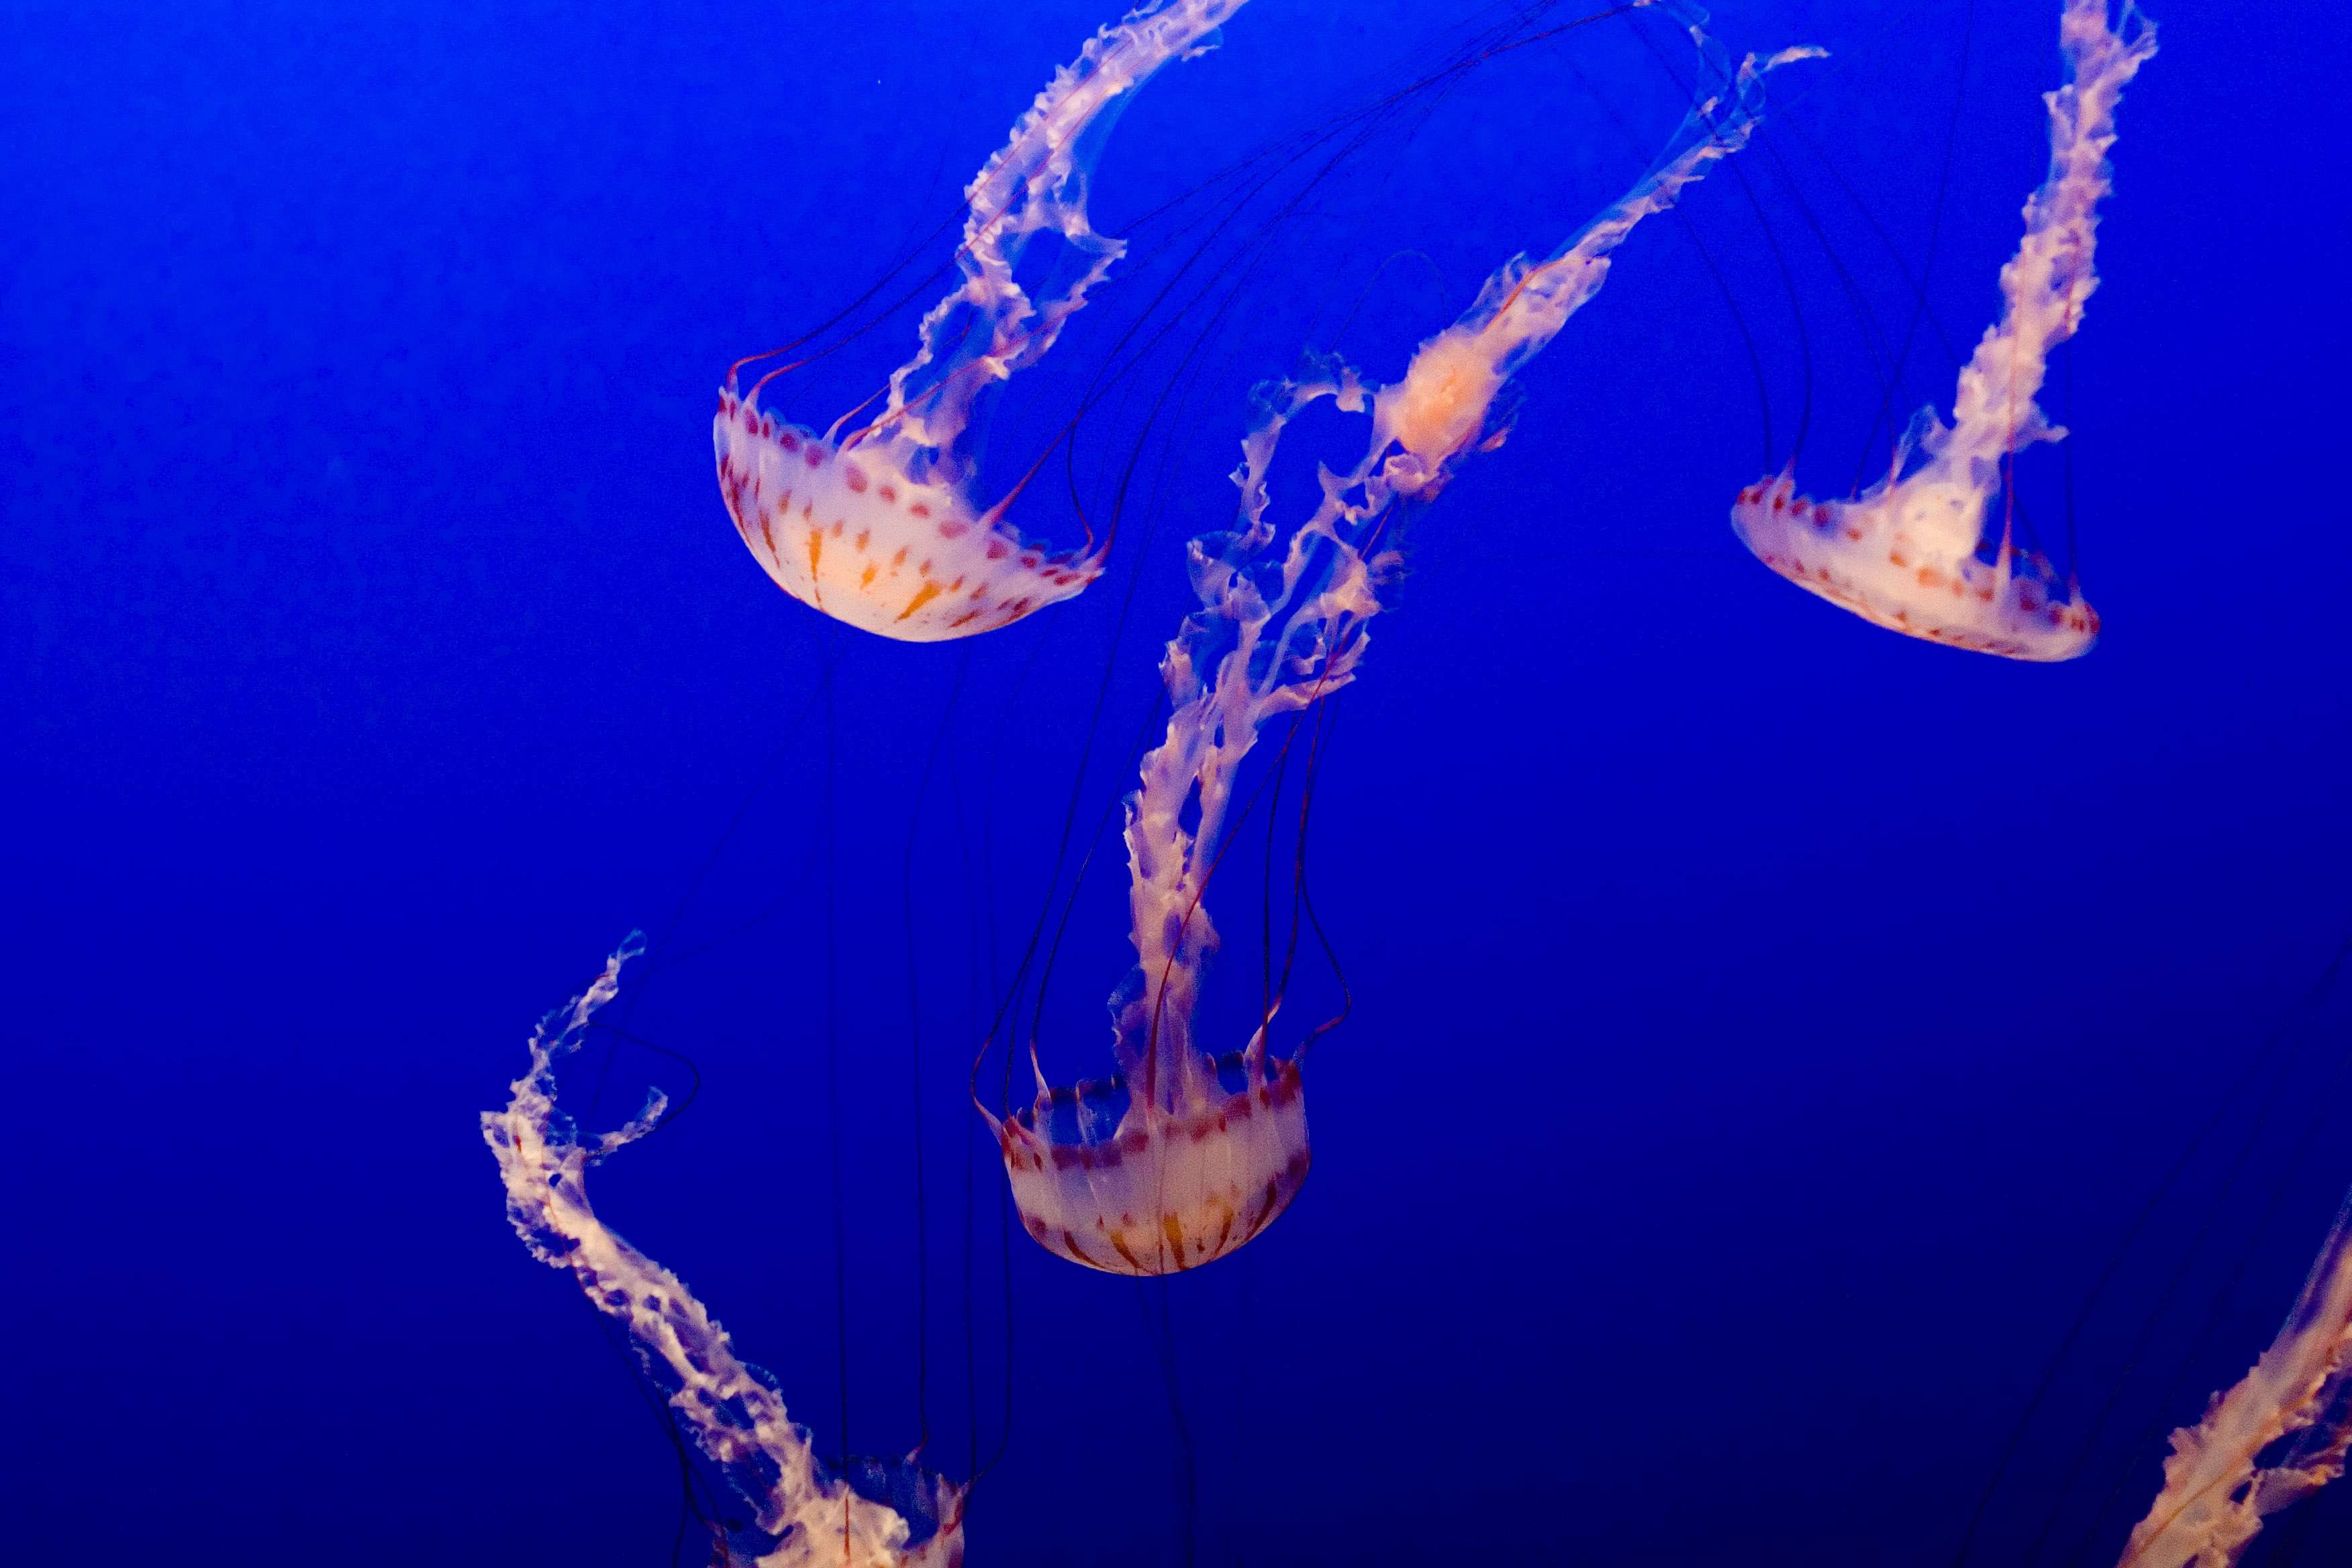 ex white upside down jellyfish bunch _MG_7285.jpg photo - trinko ...